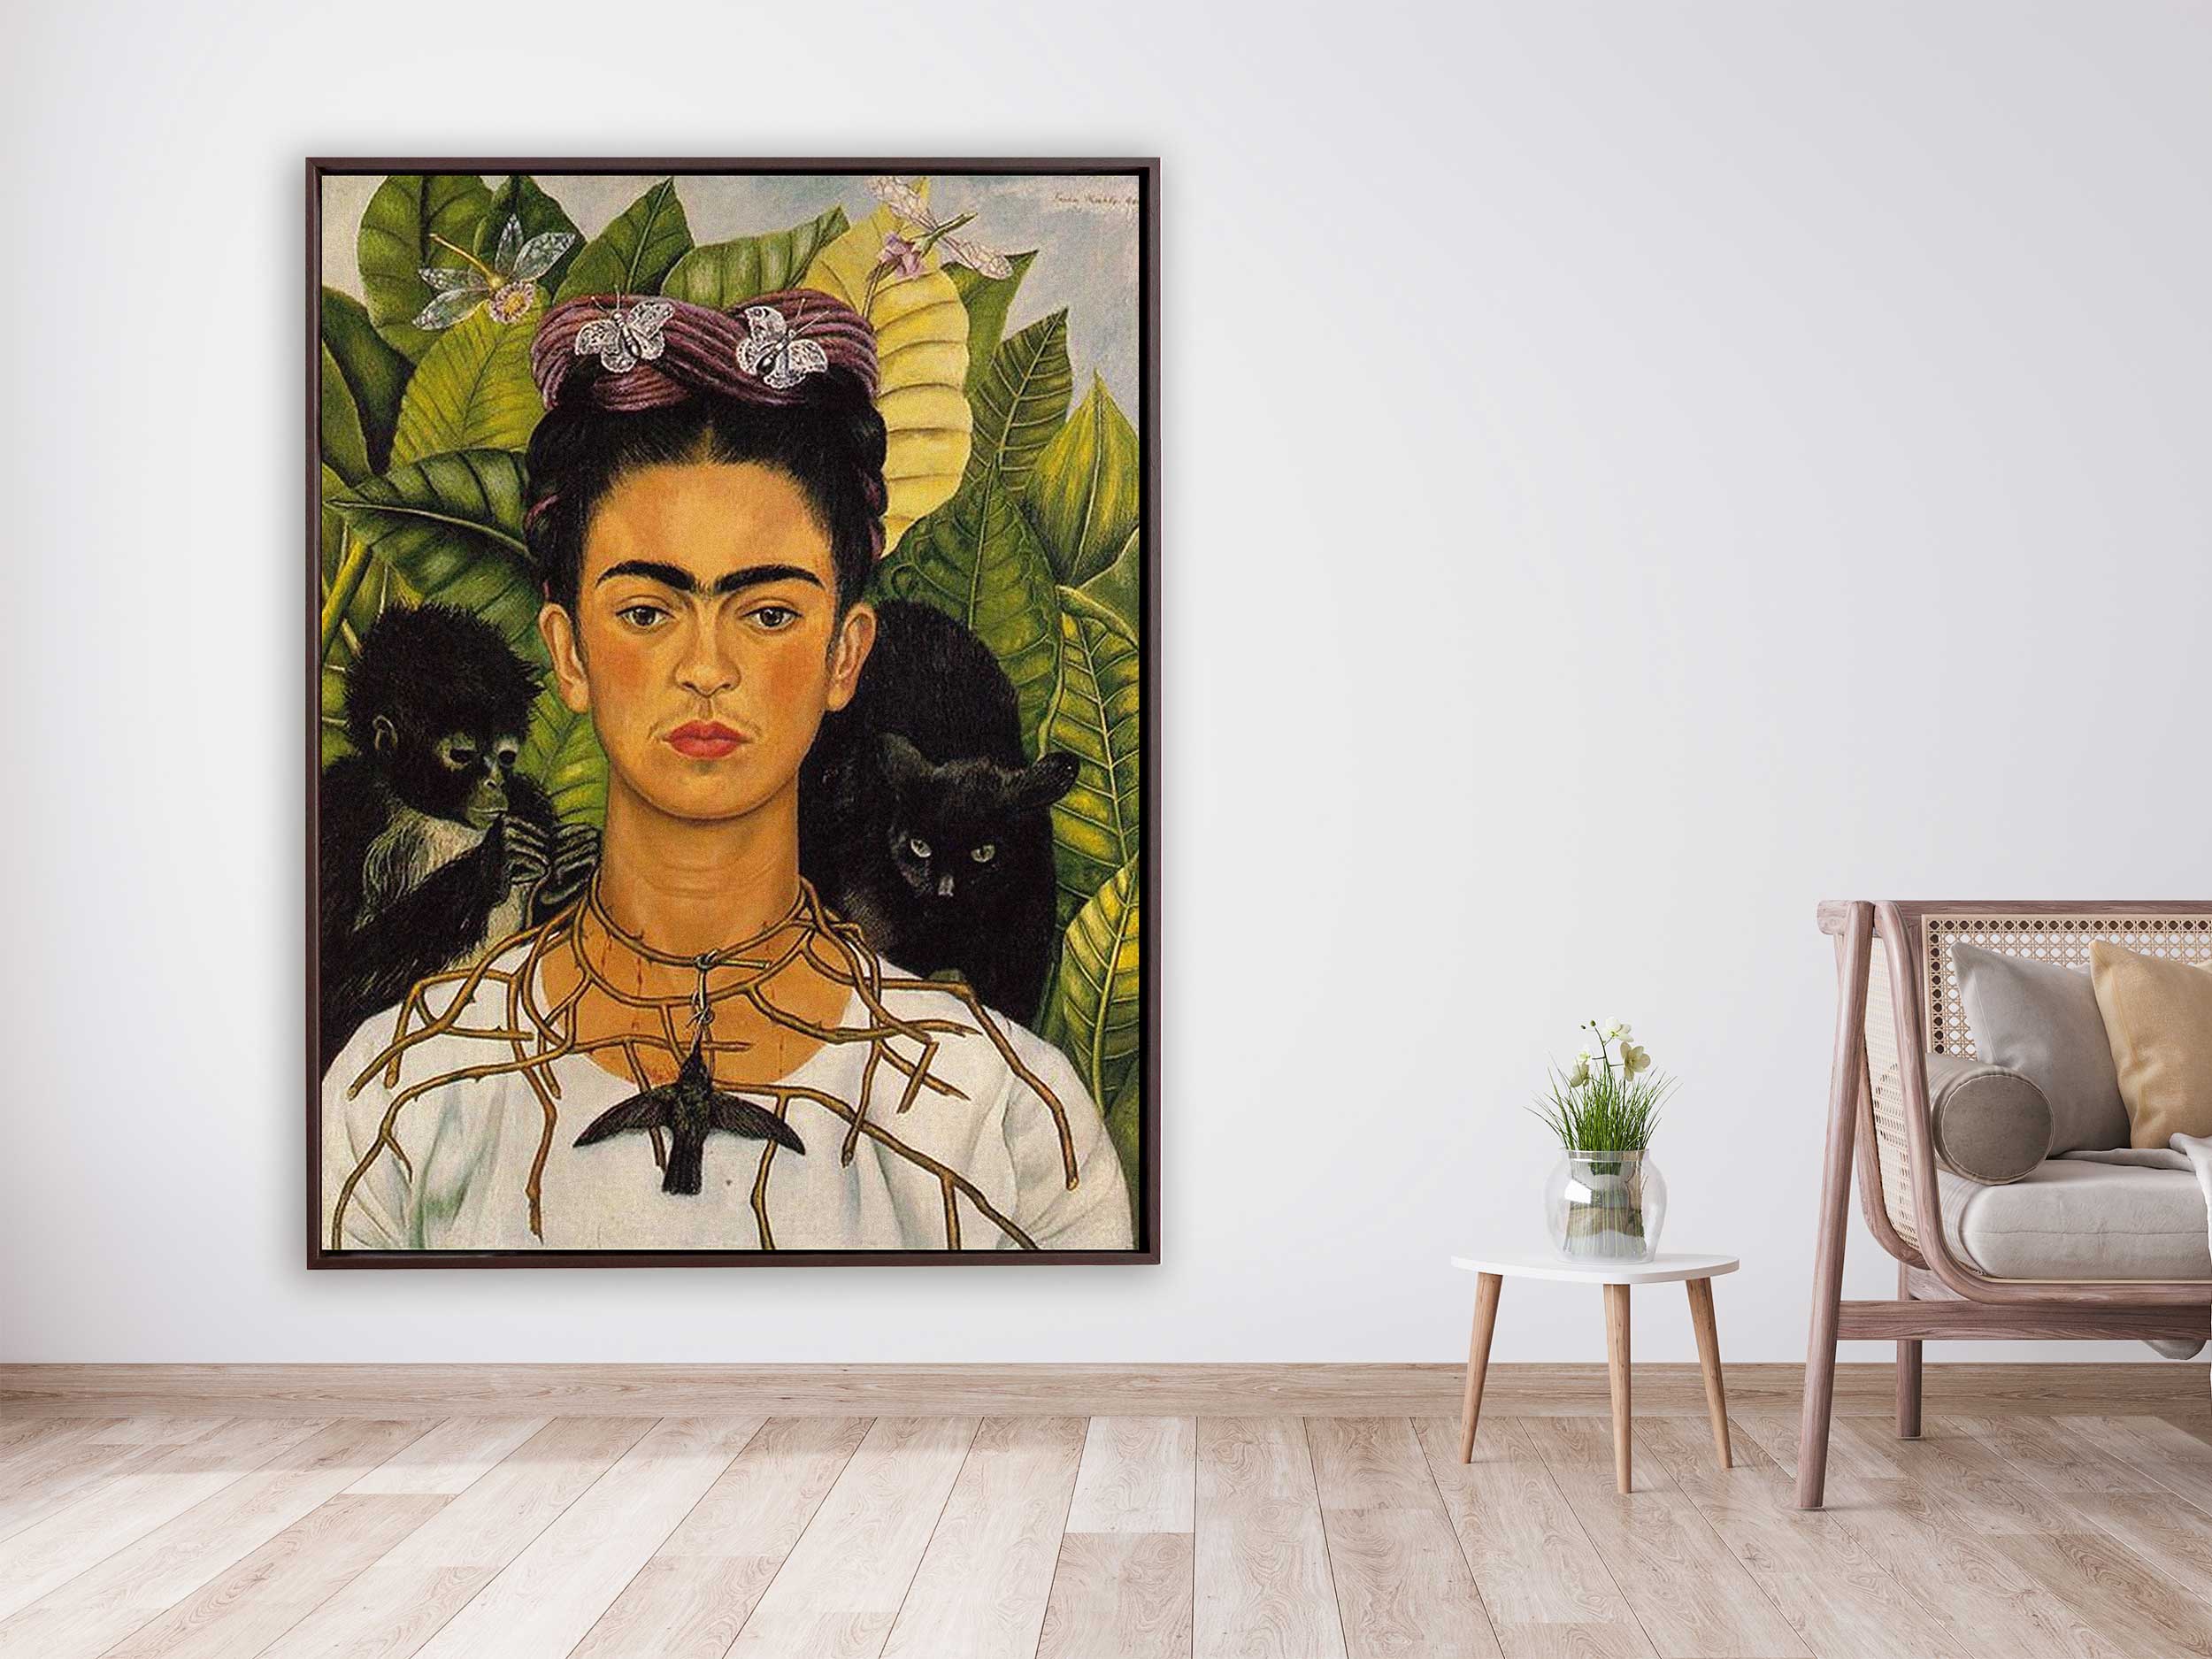 Frida Kahlo -  Self-portrait with Thorn Necklace and Hummingbird, 1940, Rahmen Schattenfuge braun